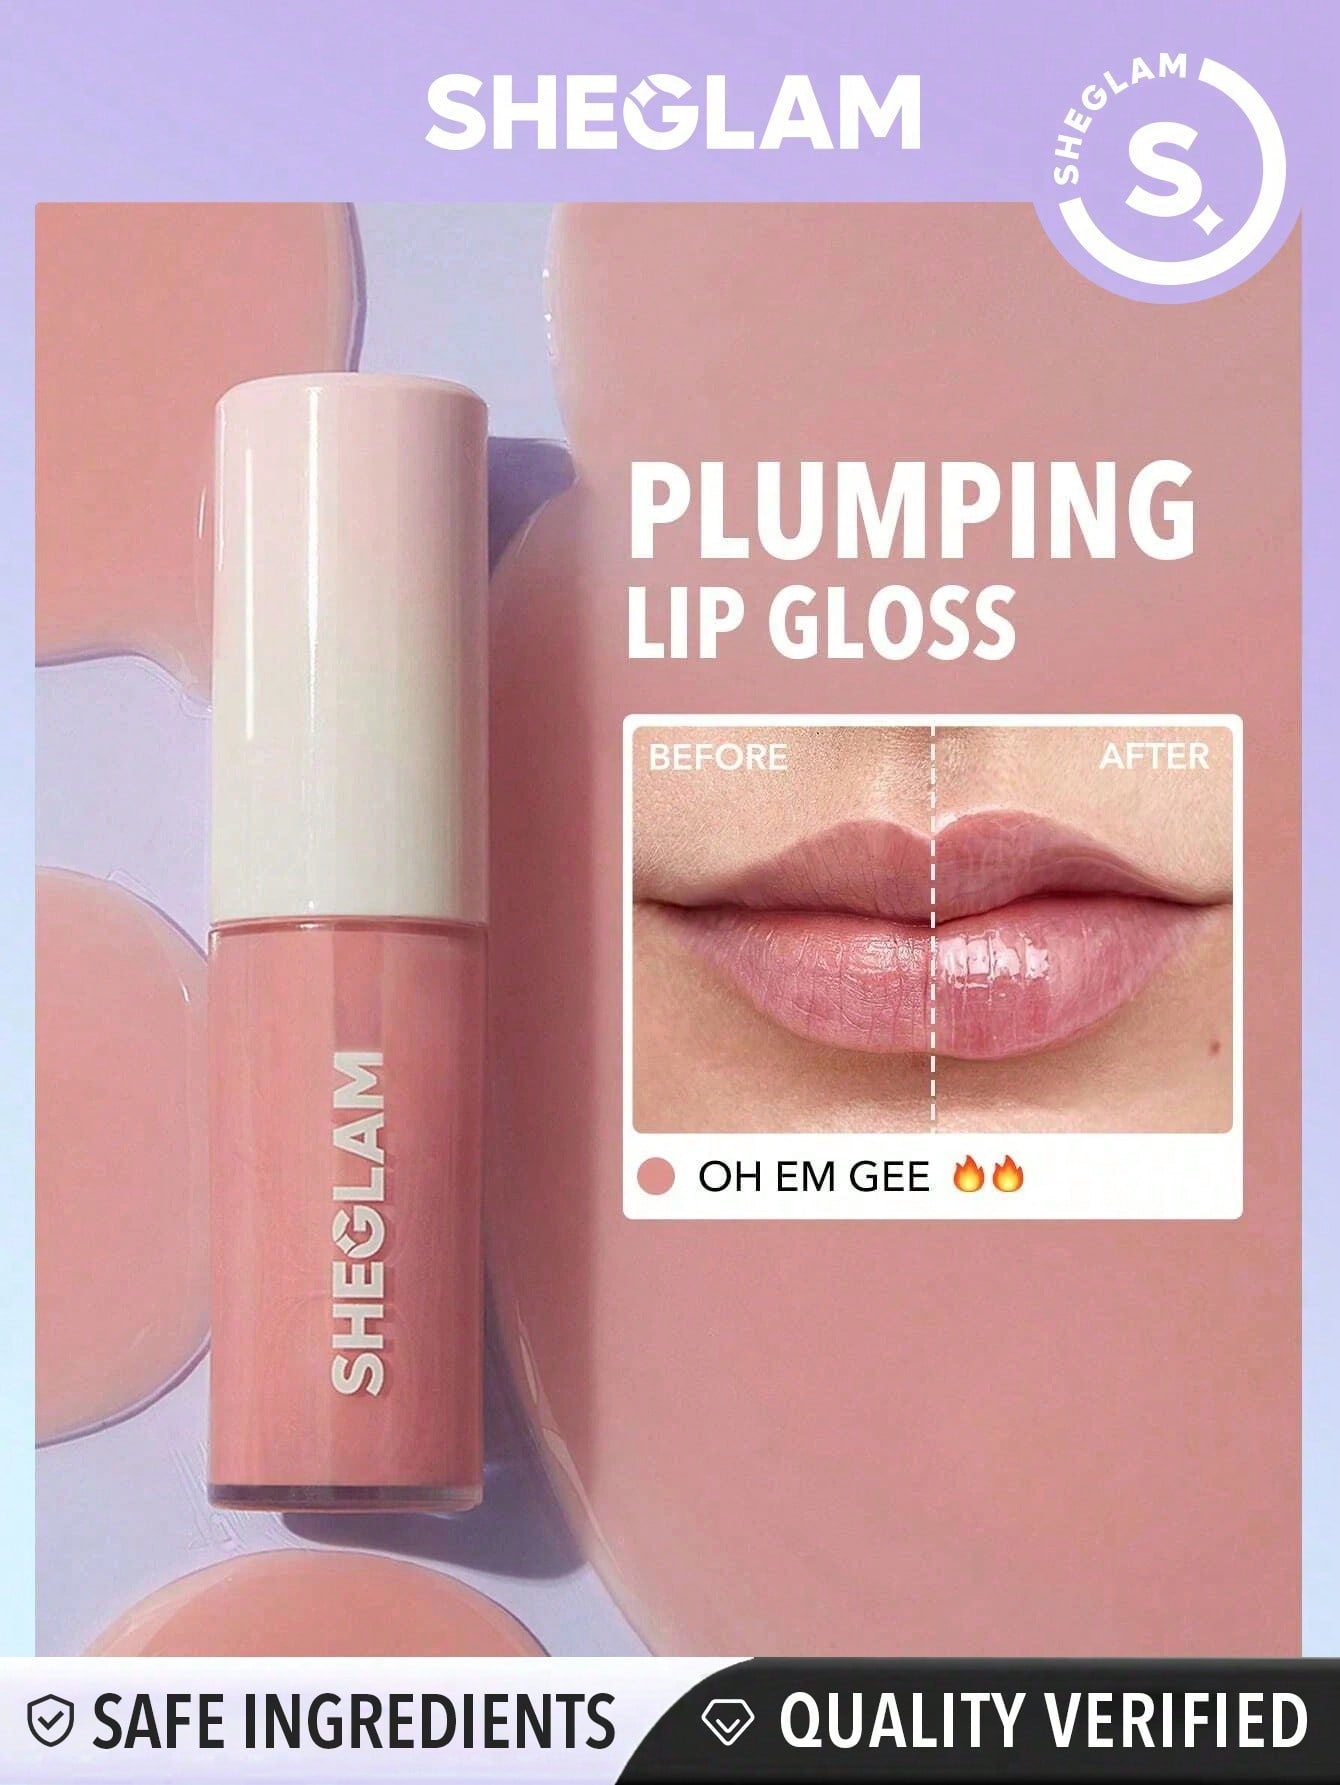 SHEGLAM Hot Goss Plumping Lip Gloss OT - Negative Apparel